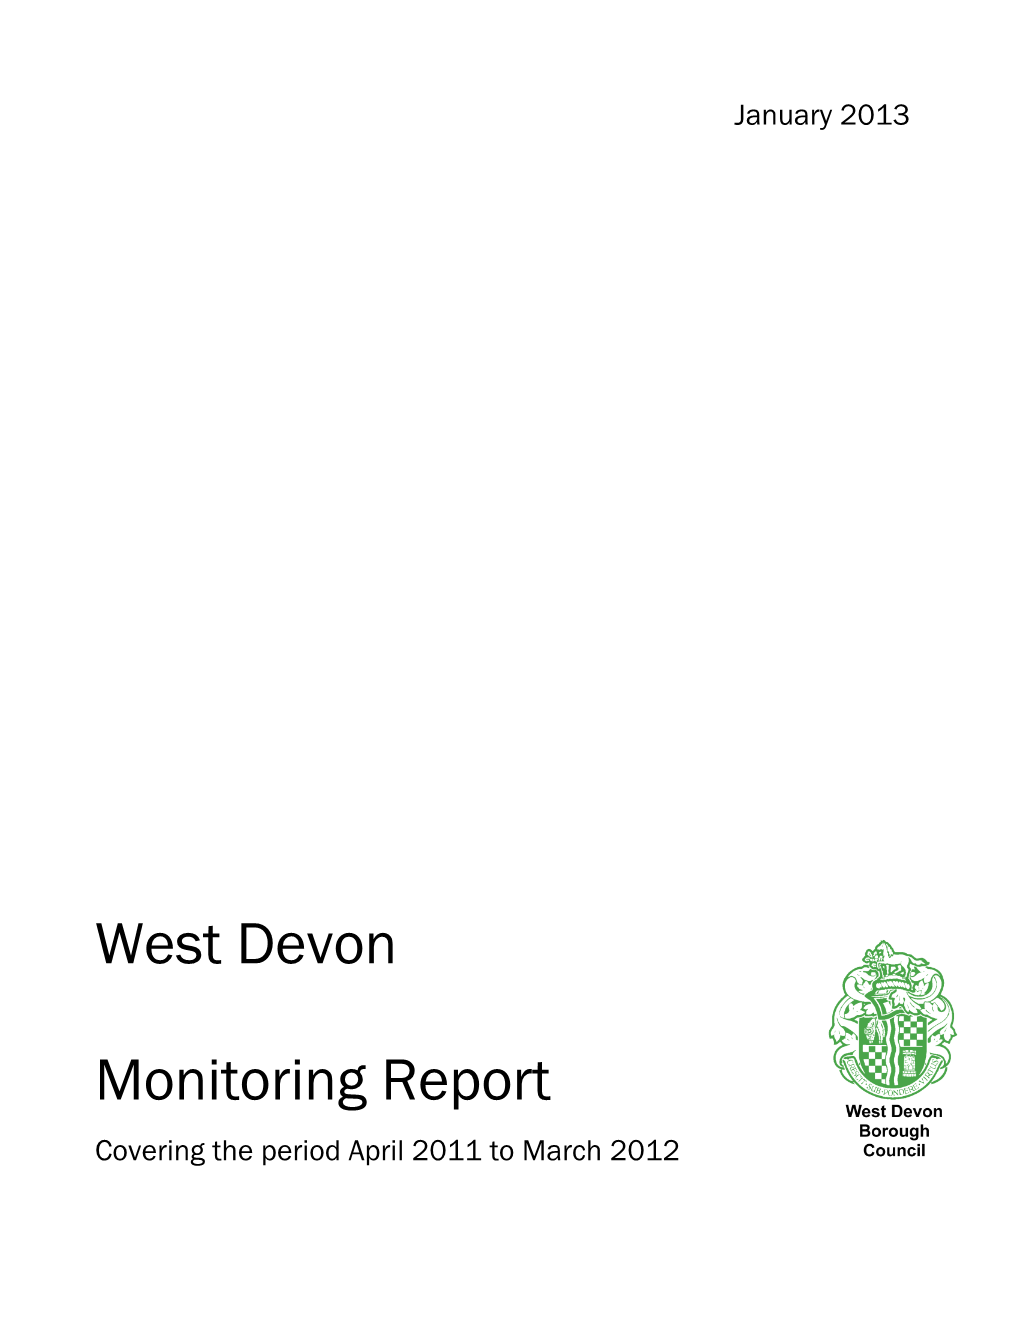 West Devon Authorities Monitoring Report 2011 to 2012